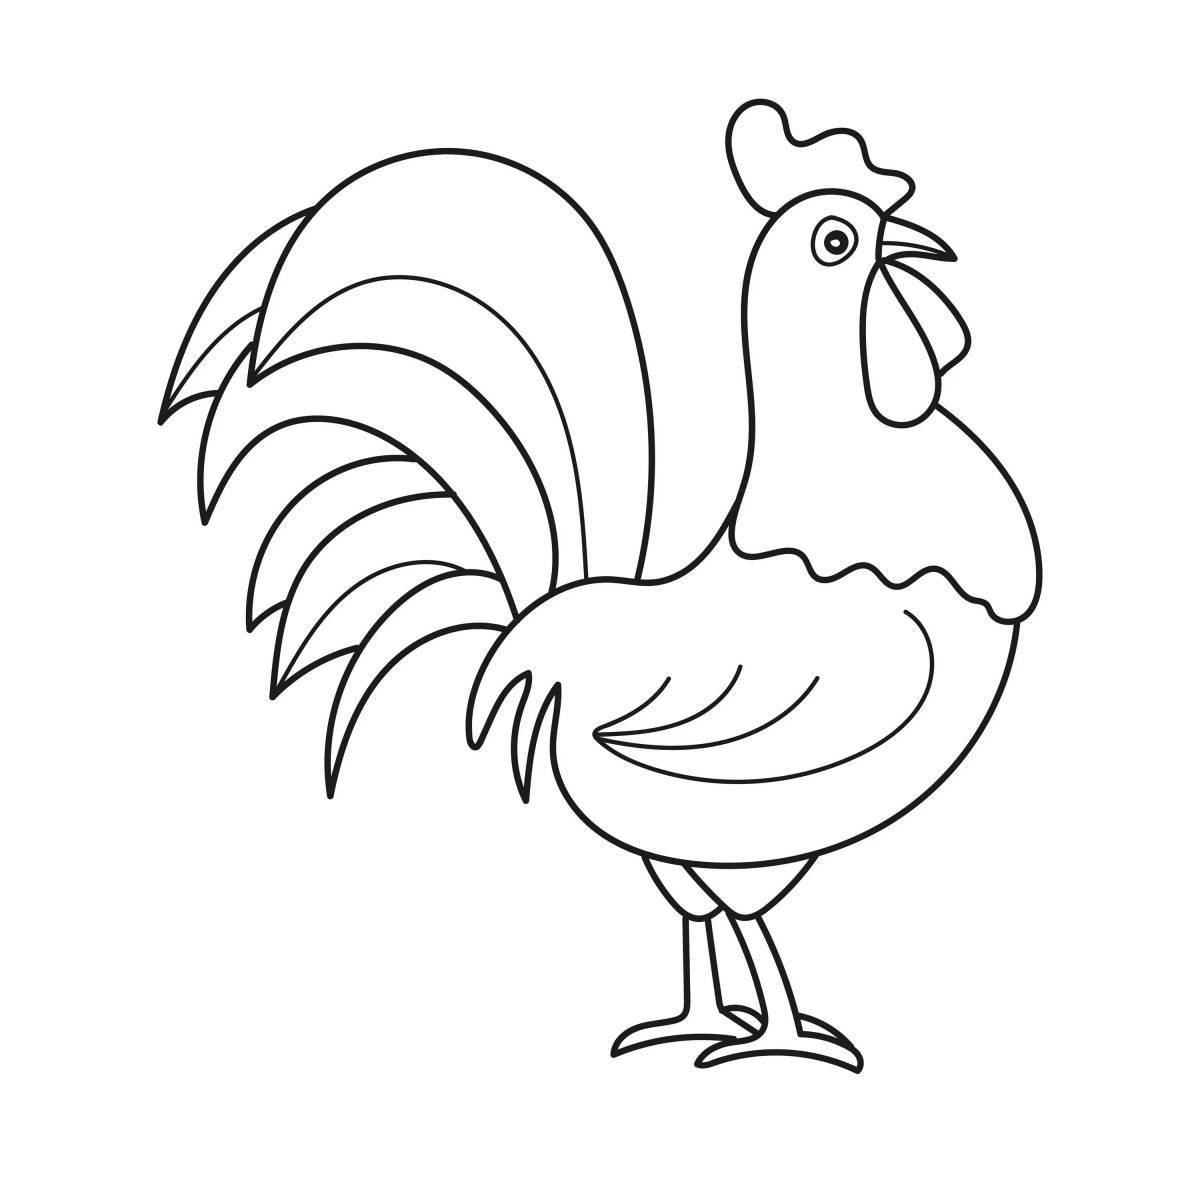 Attractive cockerel drawing for children